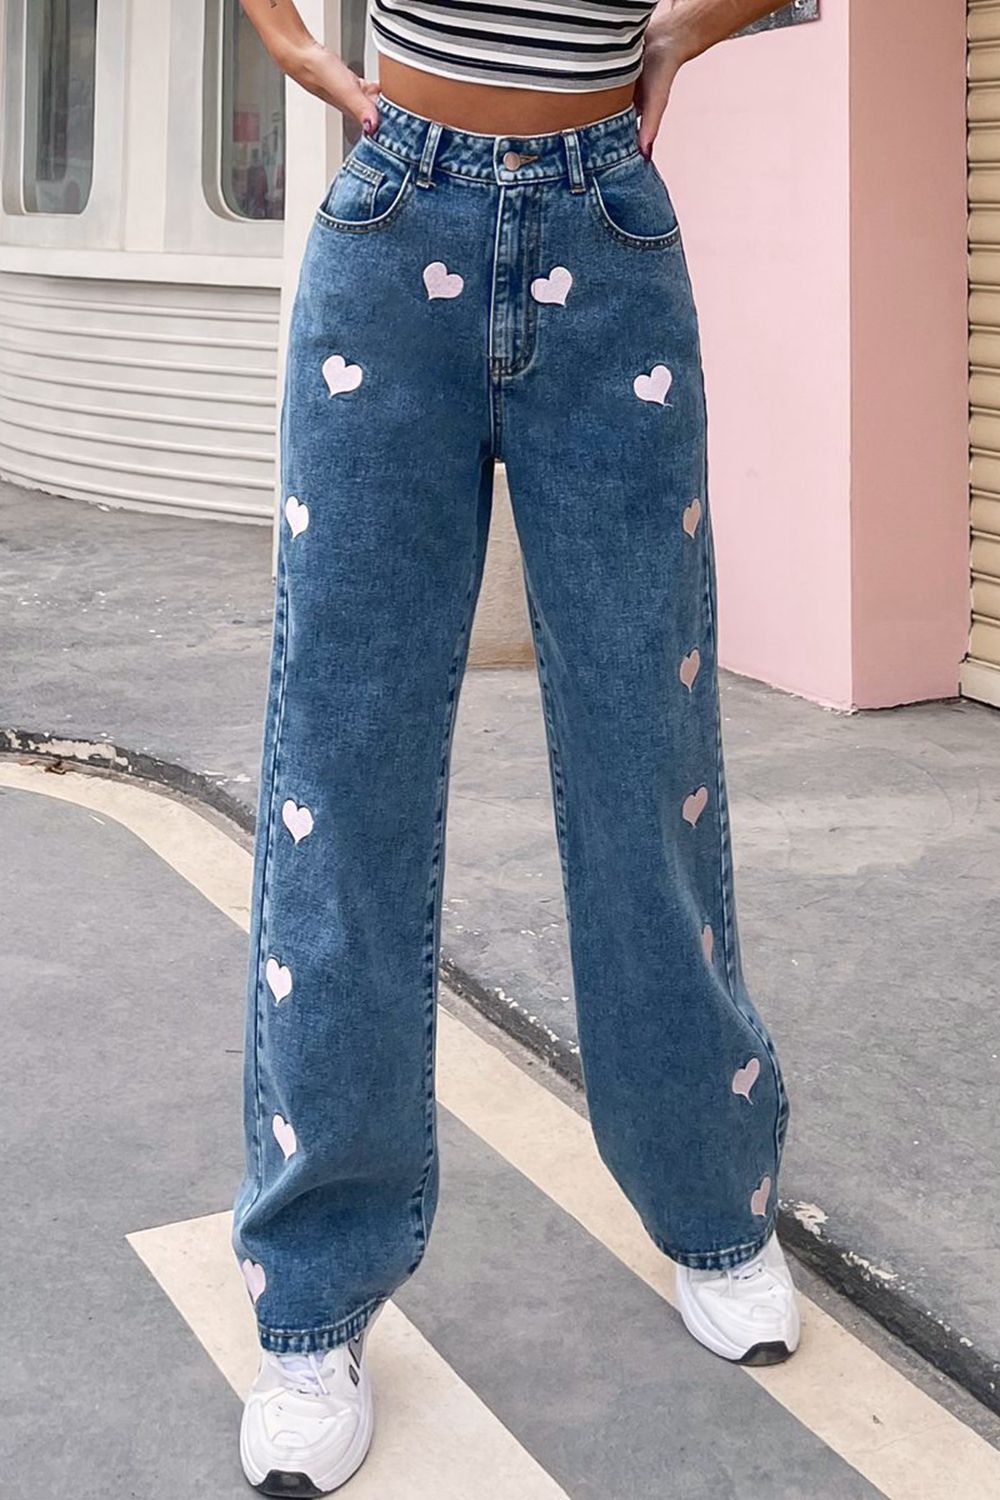 Heart Print Buttoned Jeans - Medium / XS - Bottoms - Pants - 1 - 2024